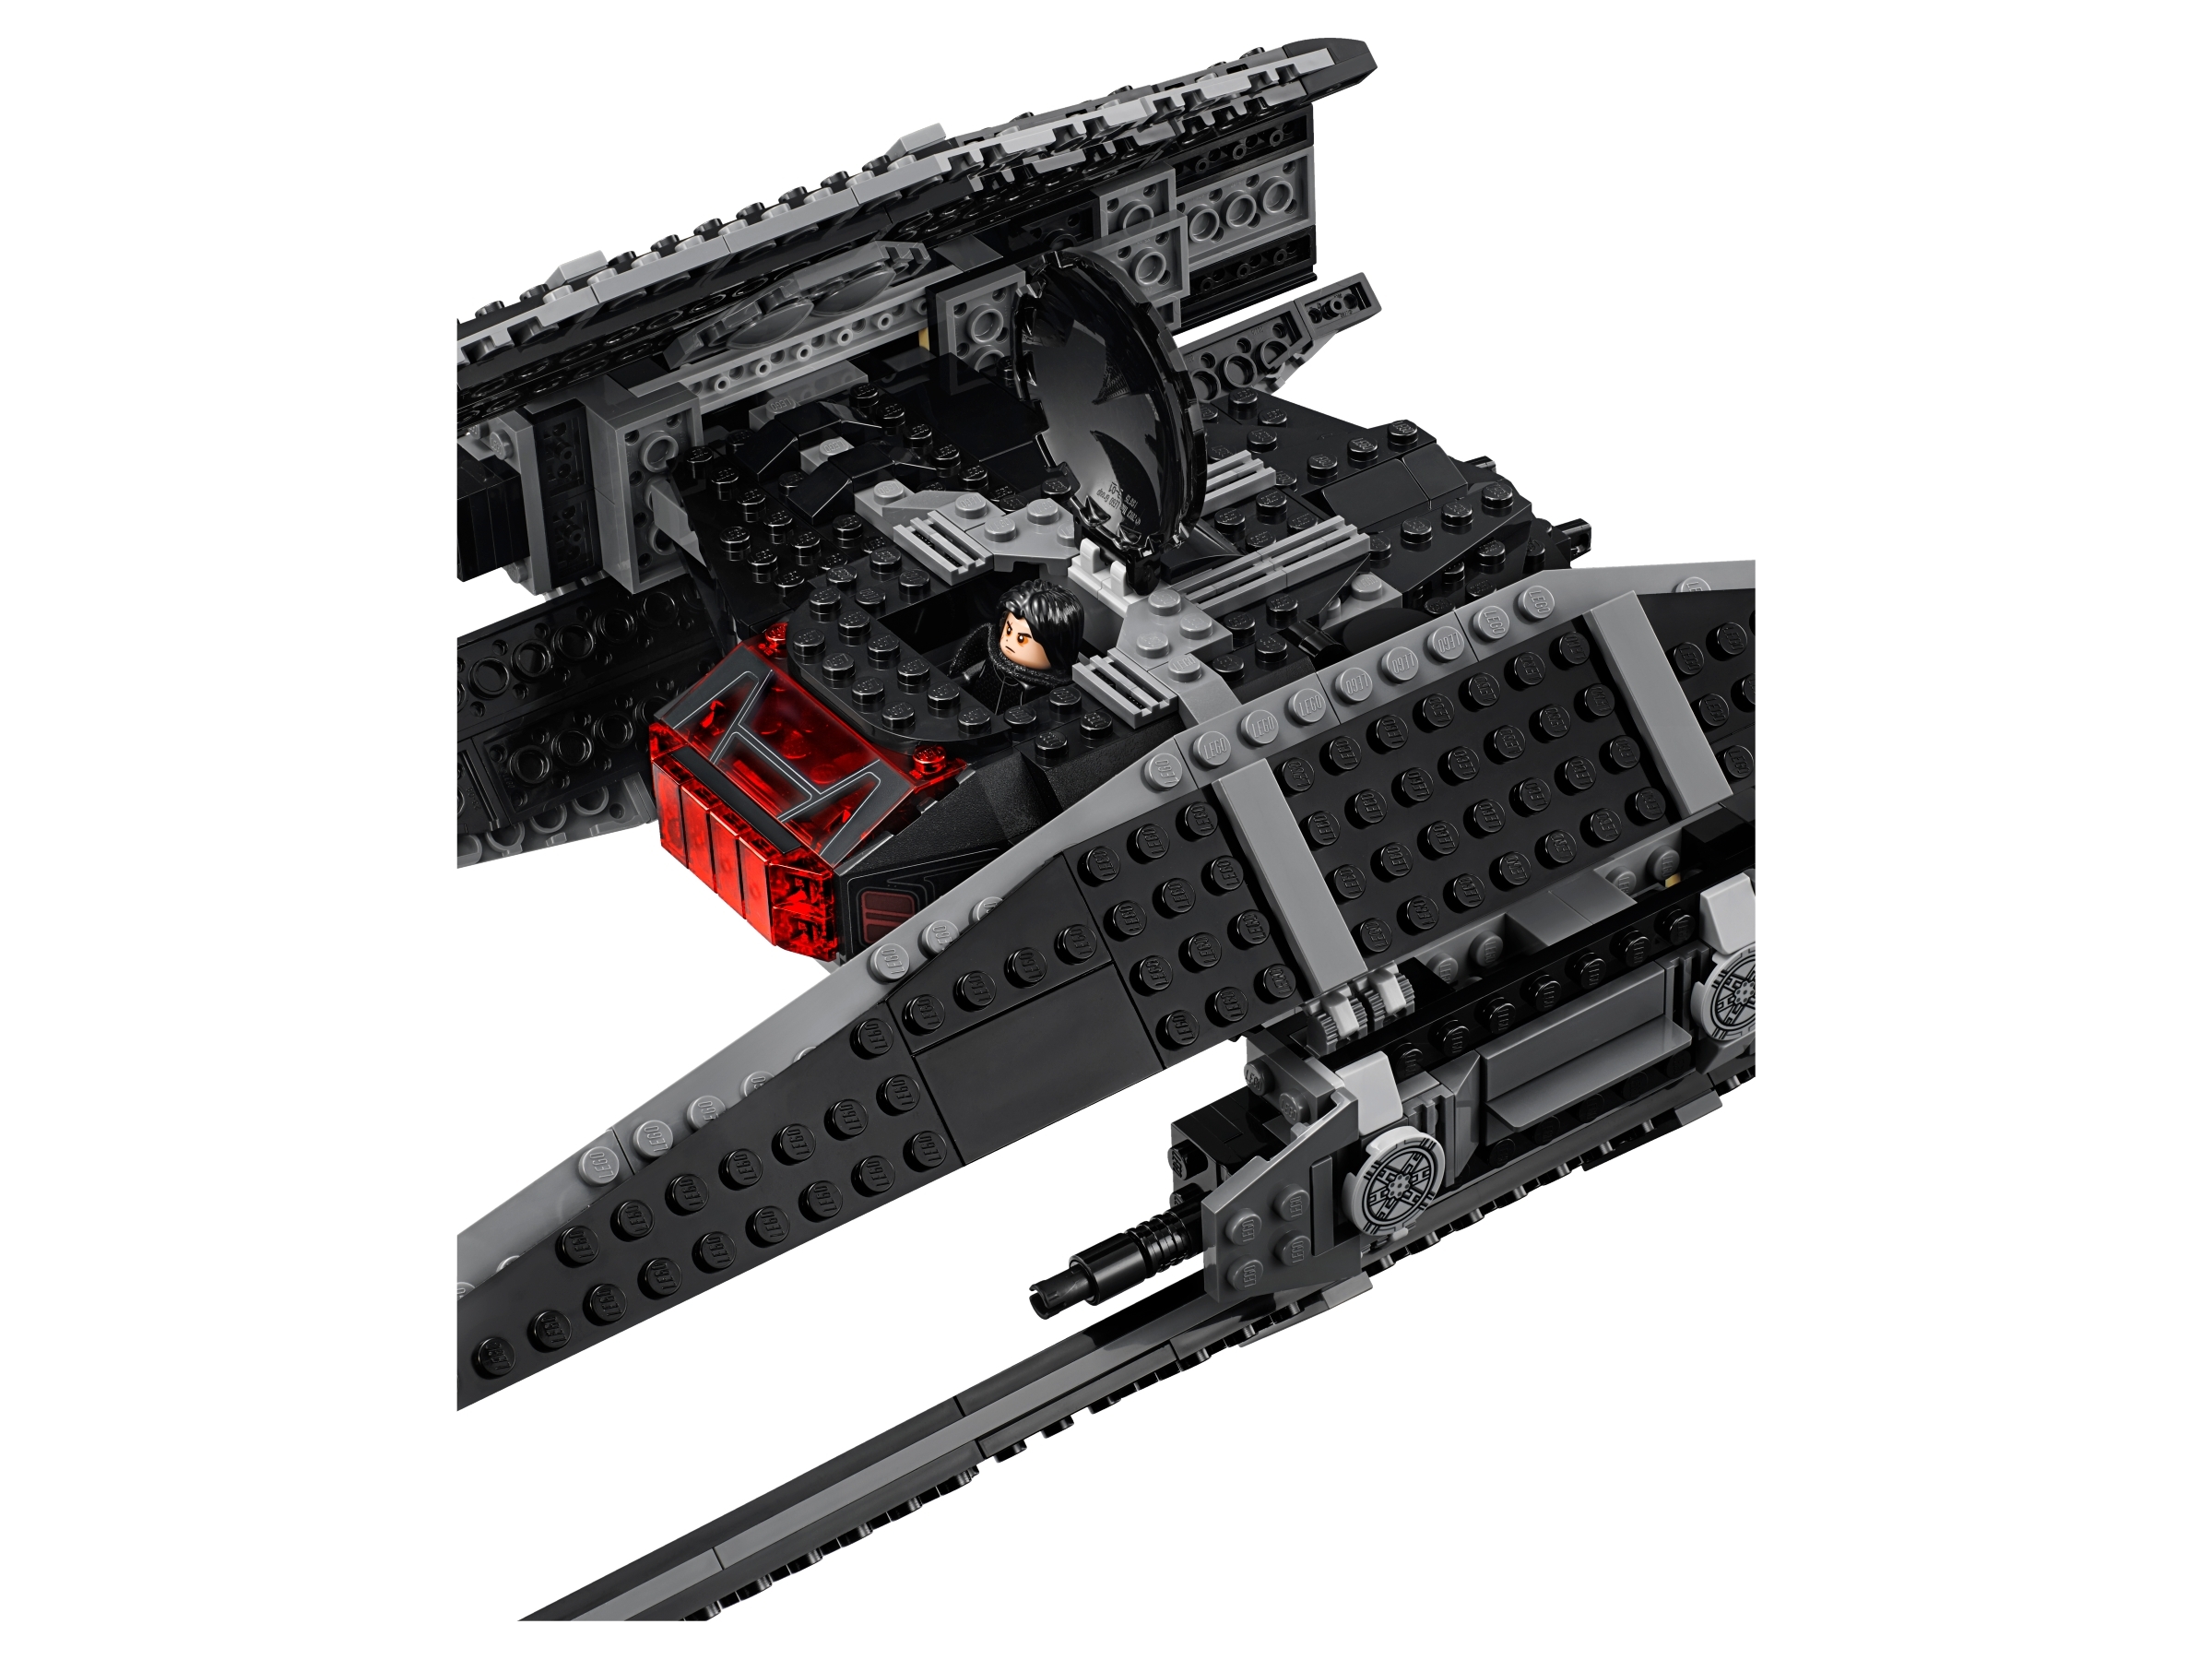 Kylo Ren's TIE Fighter™ 75179 Star Wars™ | Buy online at the LEGO® Shop US